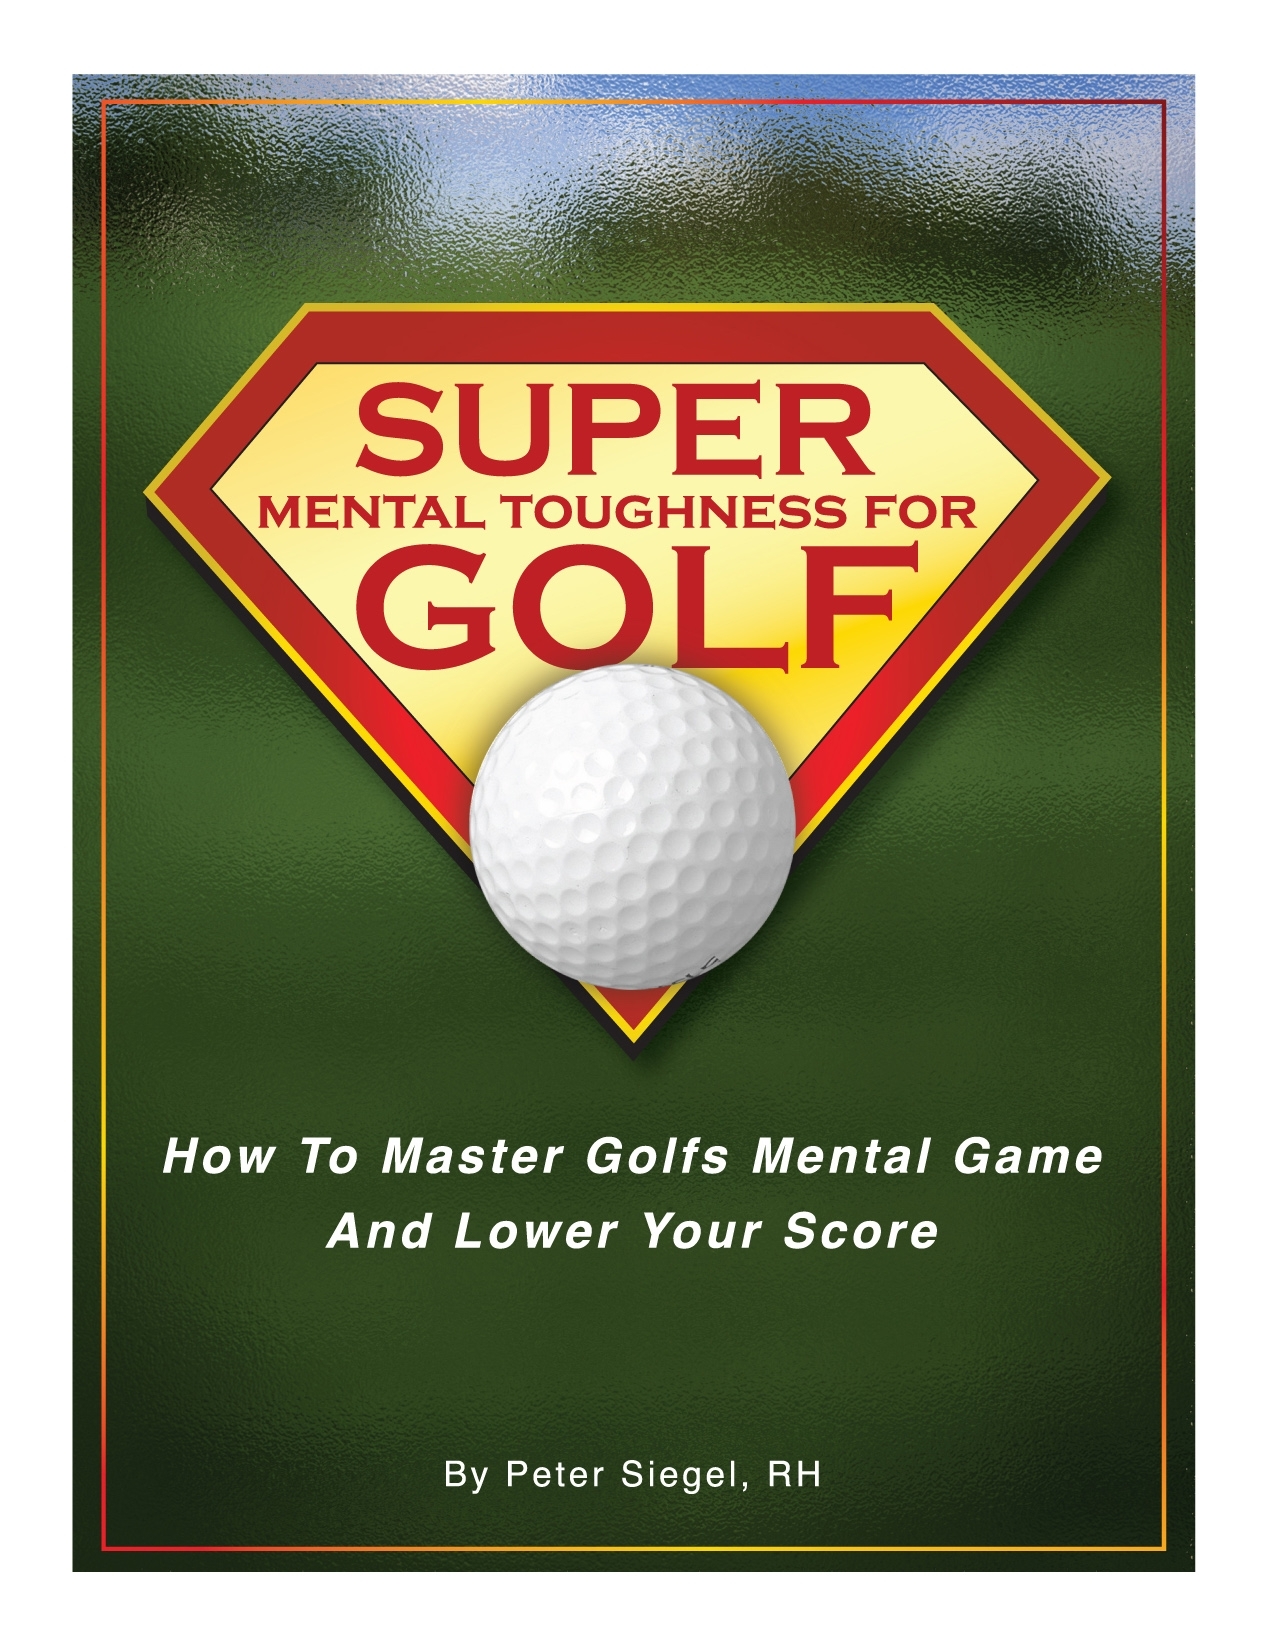 Golf mental toughness for golf cd book cover peter siegel 